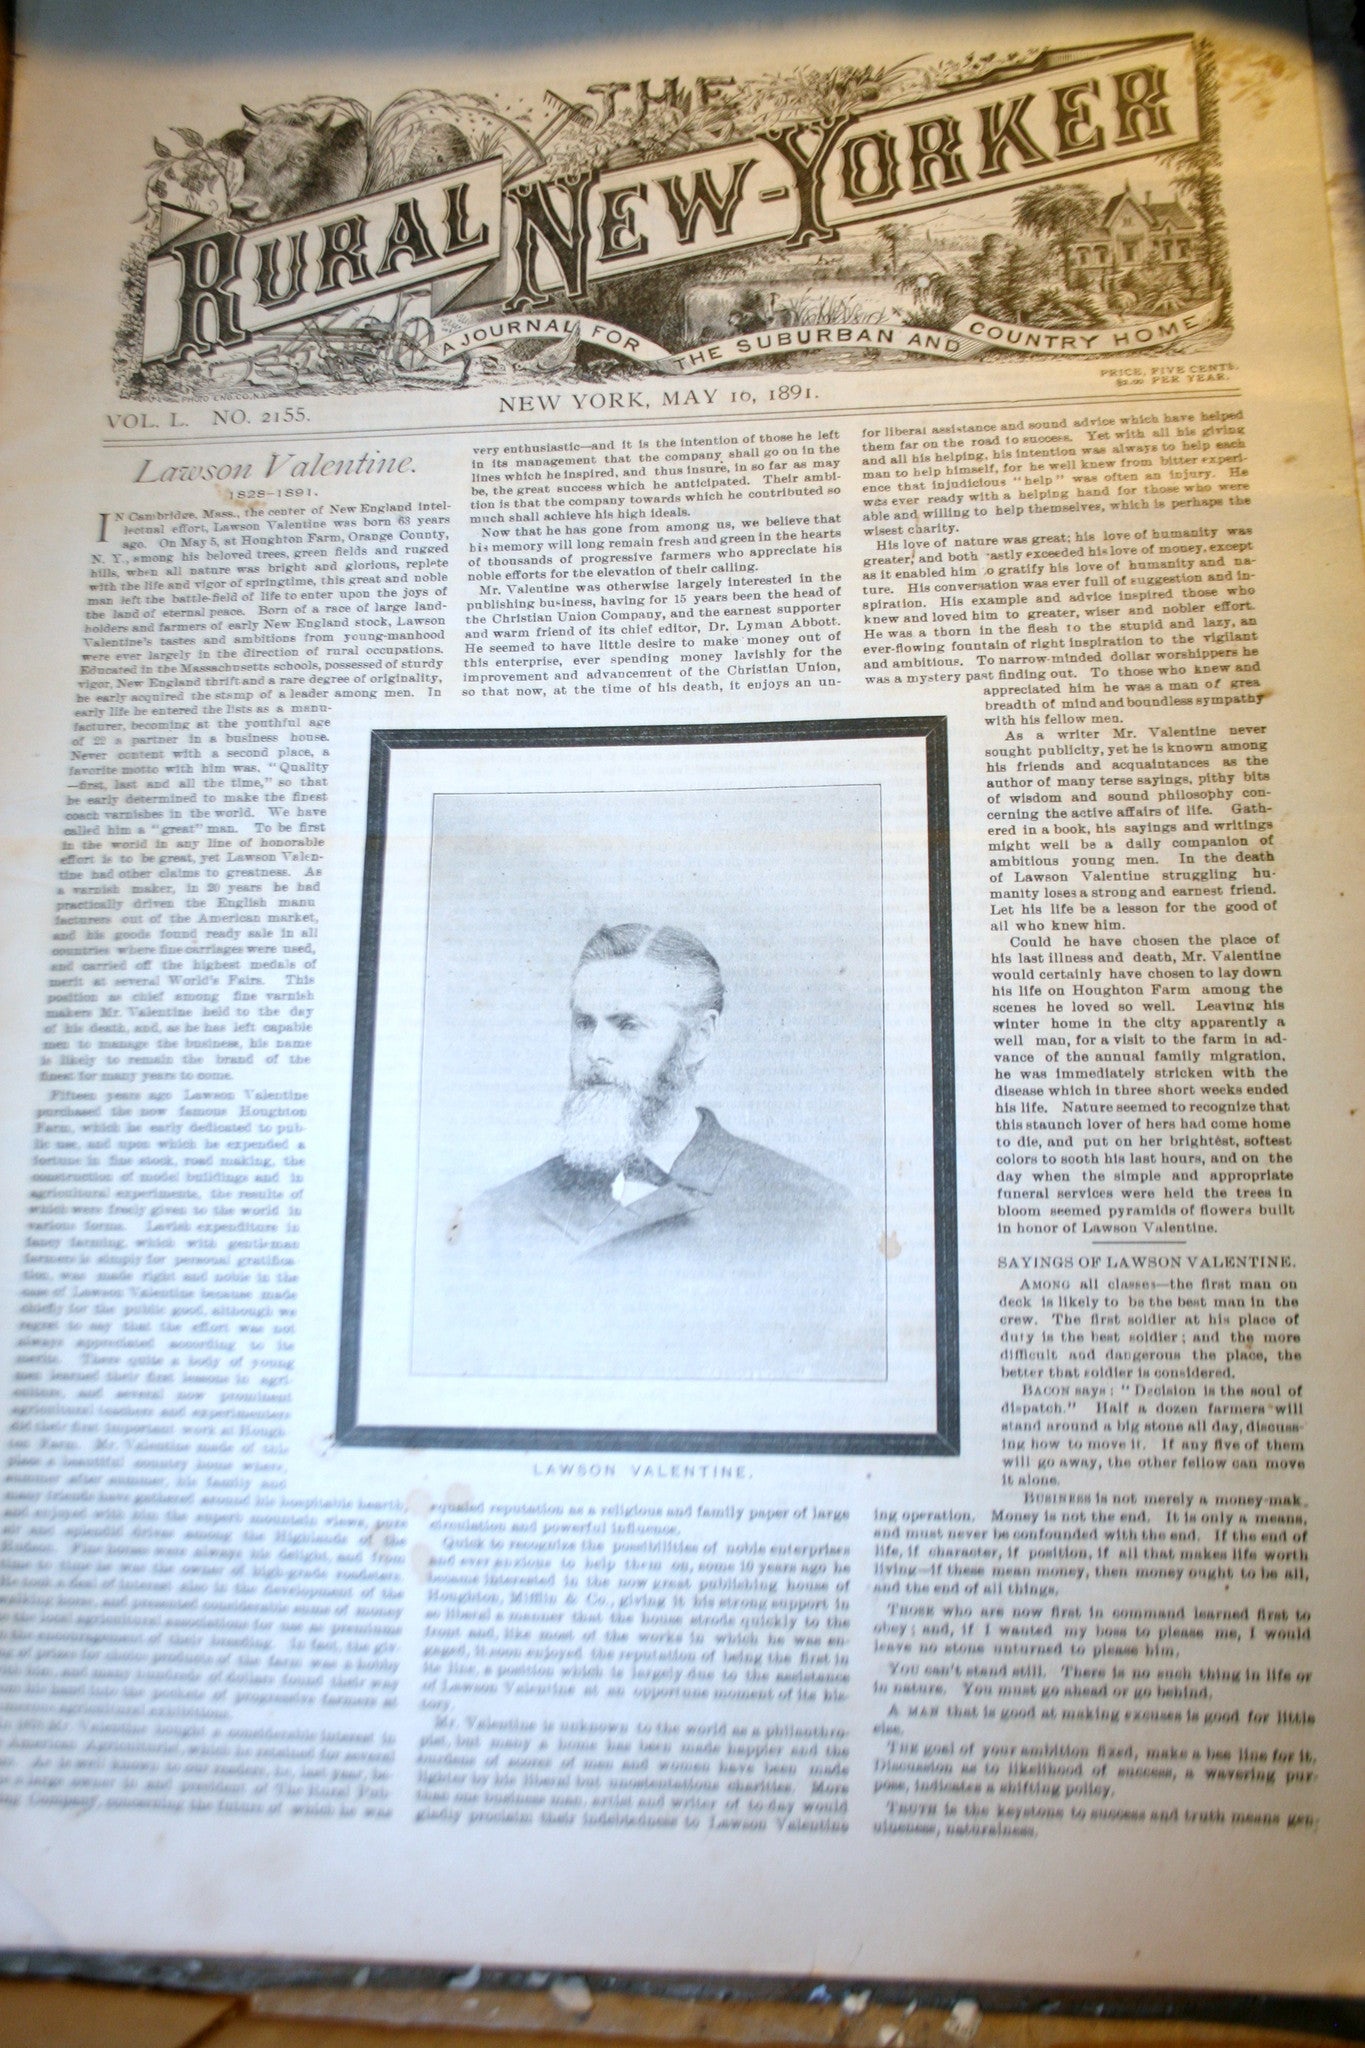 05 16 1891 NEWS Rural New-Yorker